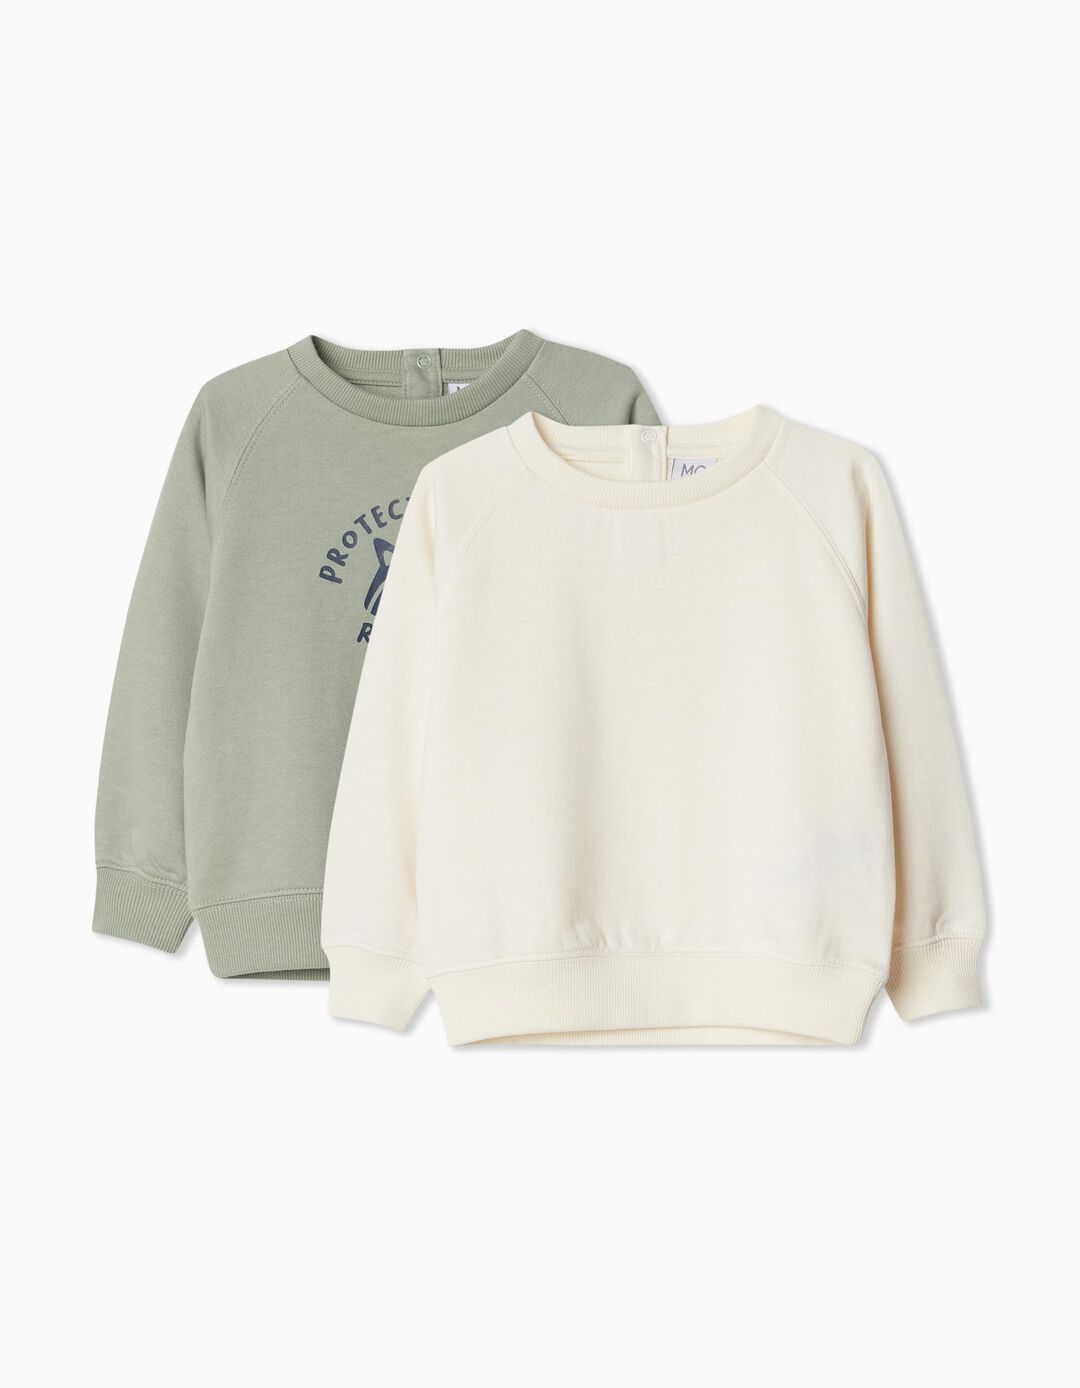 Pack 2 Fleece Sweatshirts, Baby Boy, Light Beige/Green